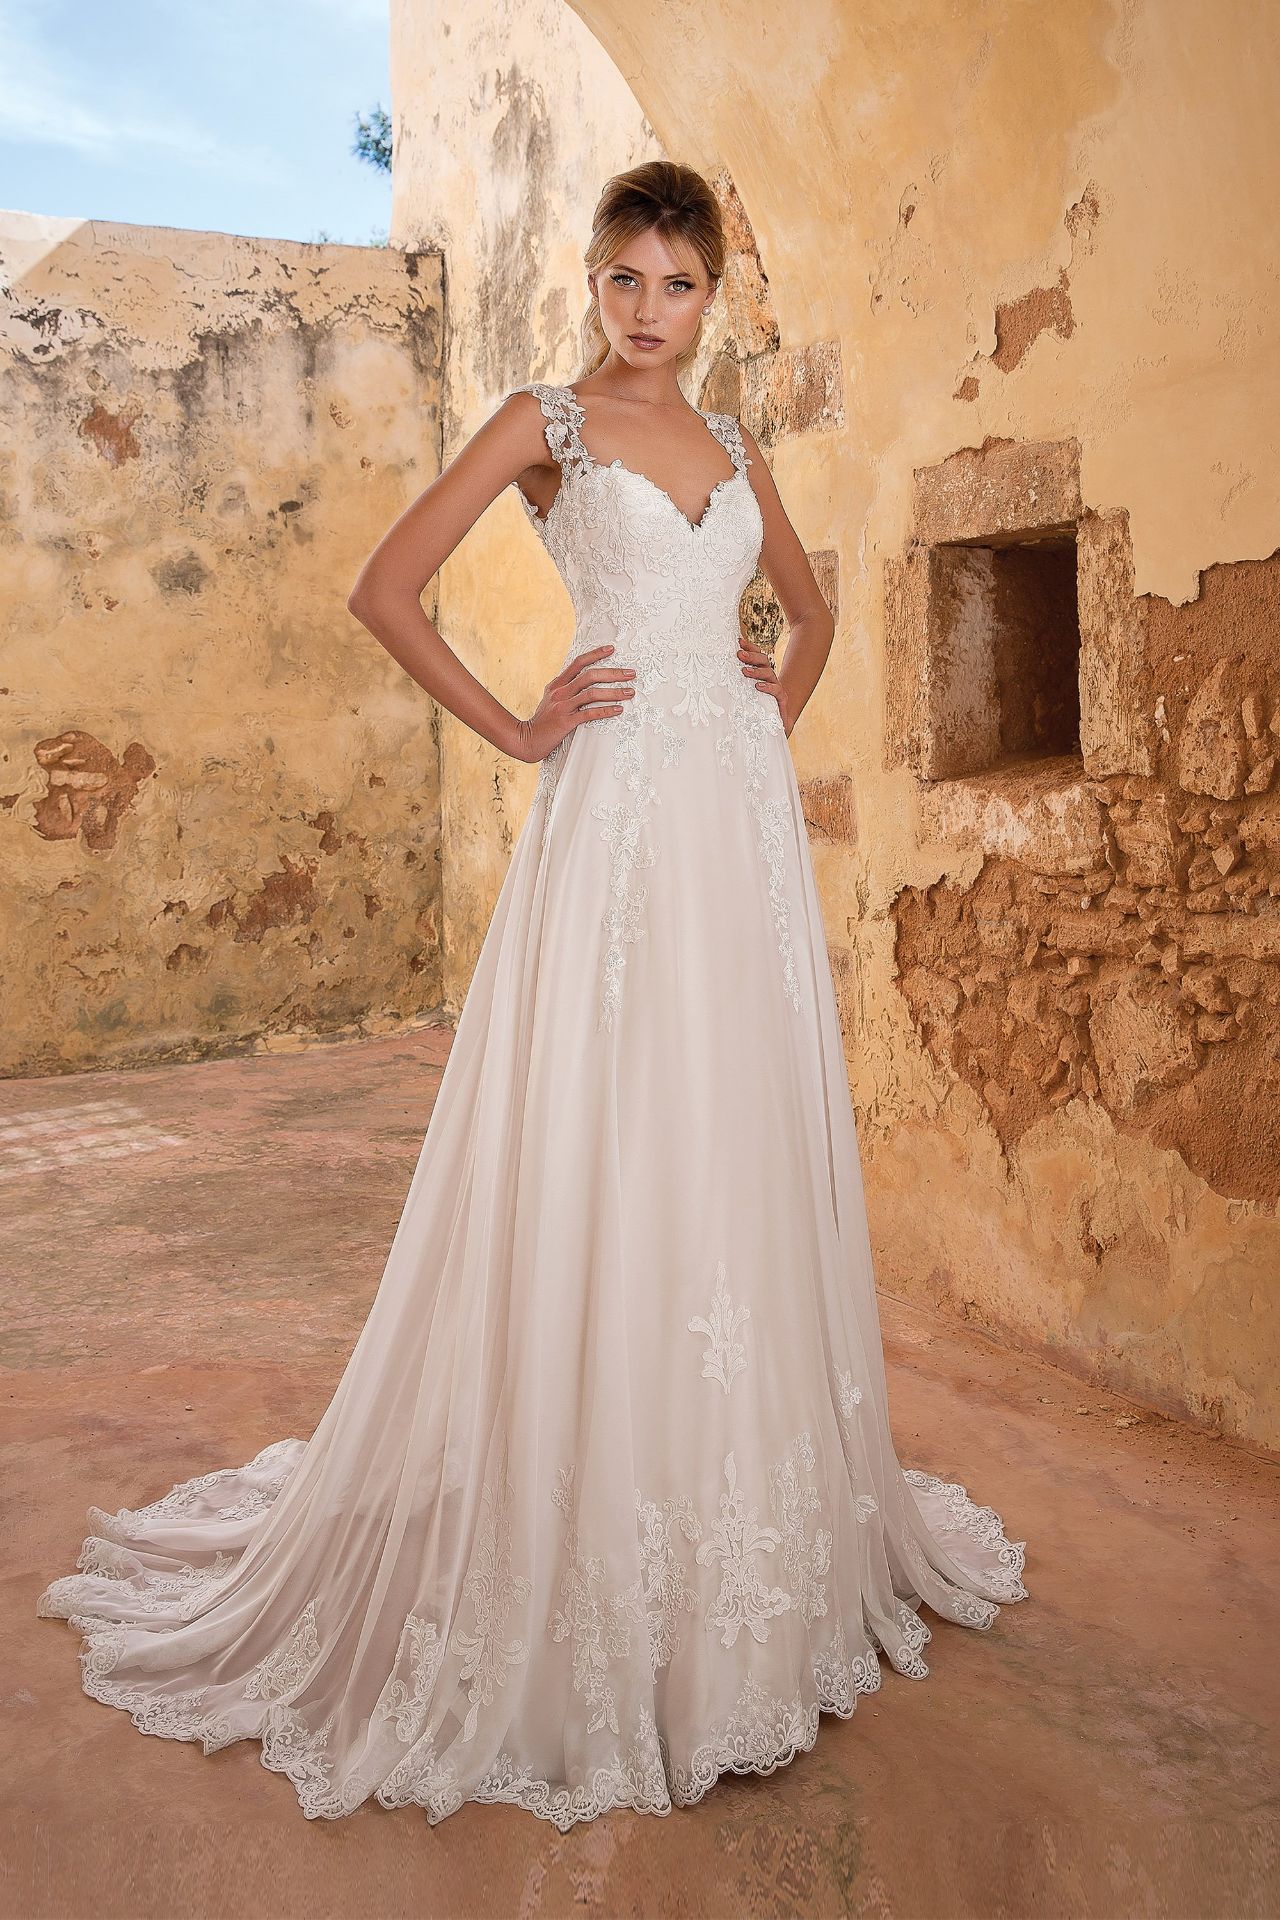 1 x Justin Alexander Designer Beaded Venice Lace A-line Wedding Bridal Dress - Size 16 - RRP £1,545